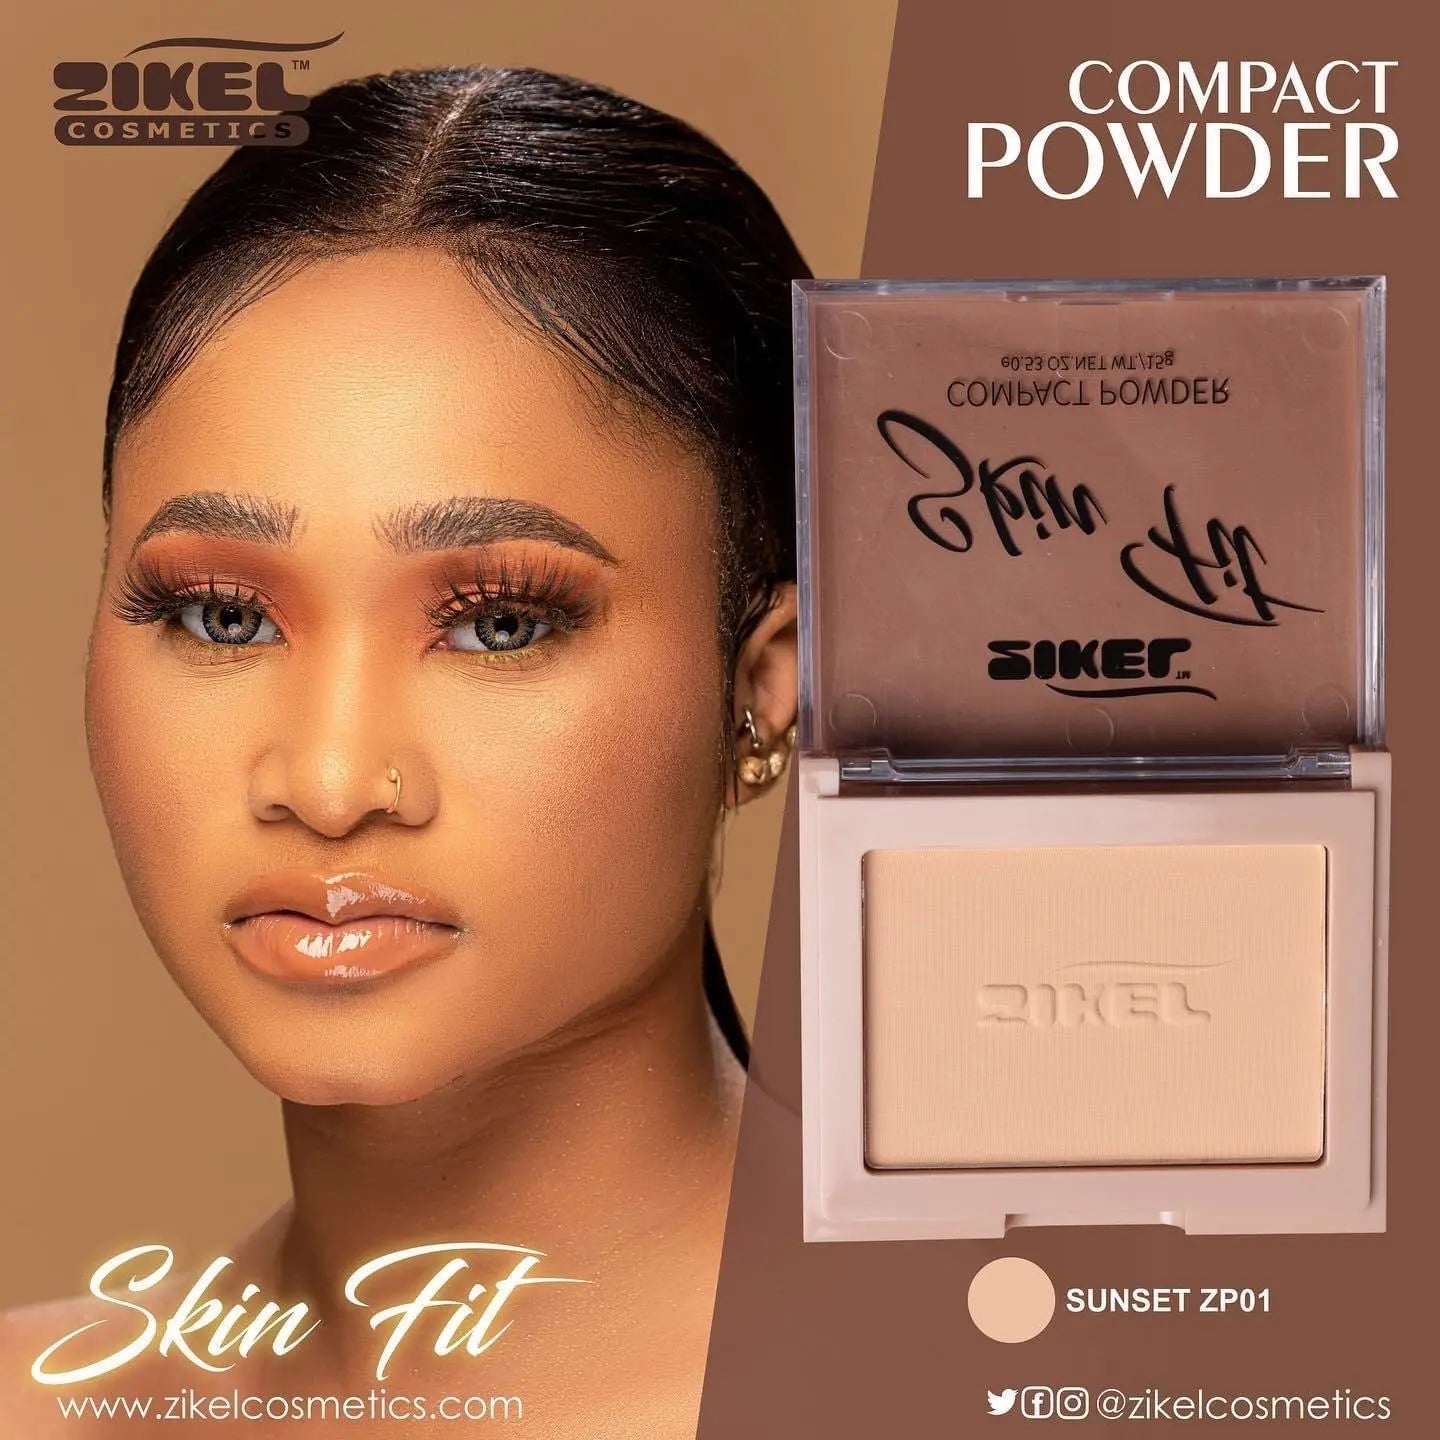 Zikel Skinfit Powder La Mimz Beauty & Fashion Store